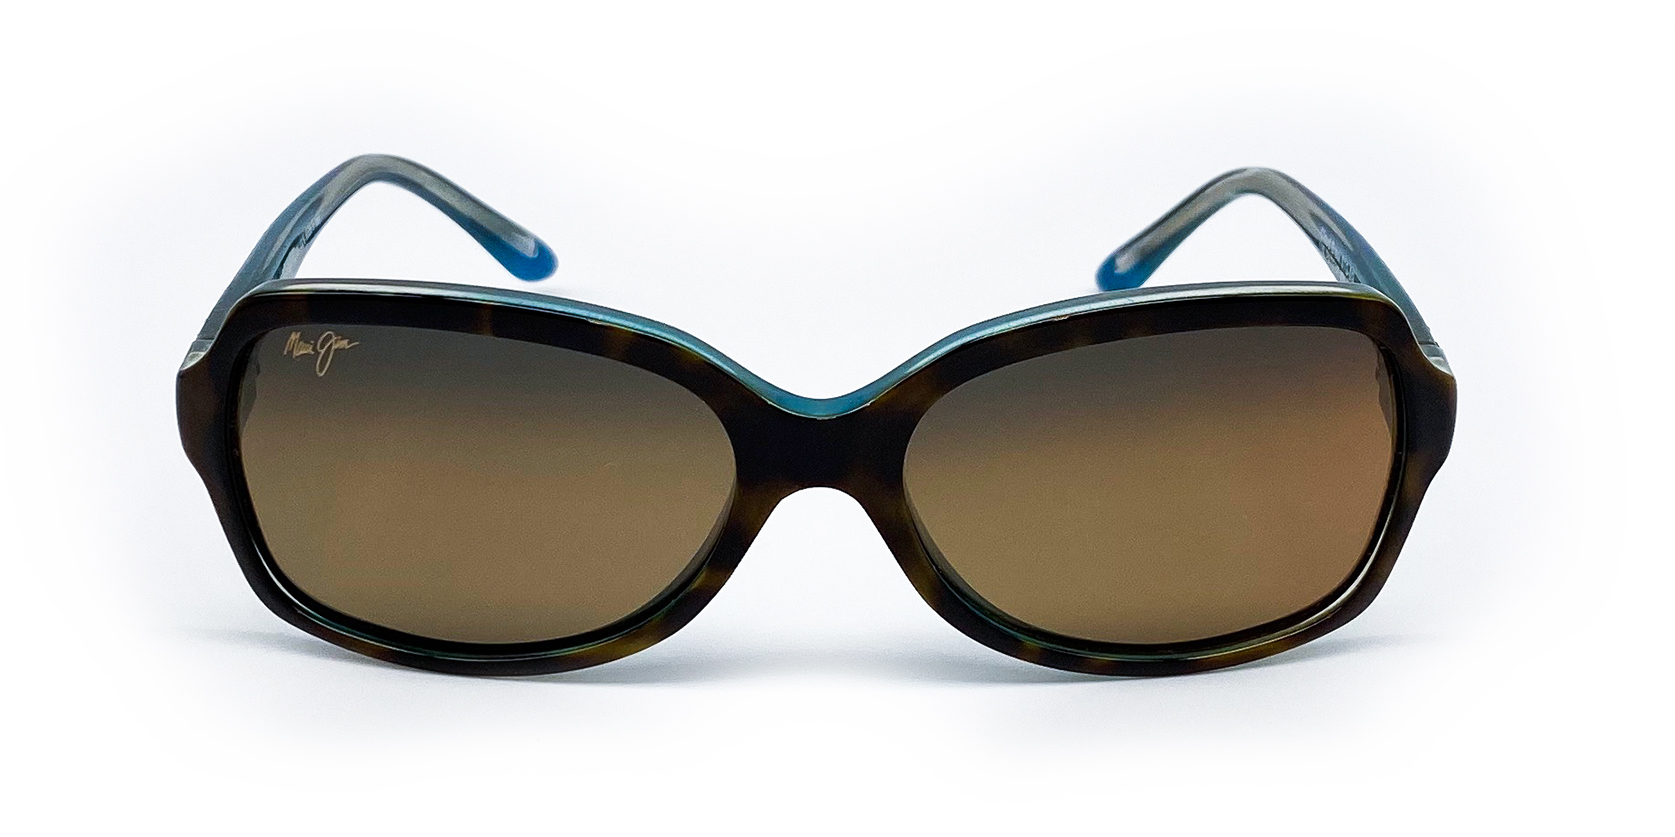 Maui Jim Beach Sunglasses UK - Hodd Barnes & Dickins Ltd